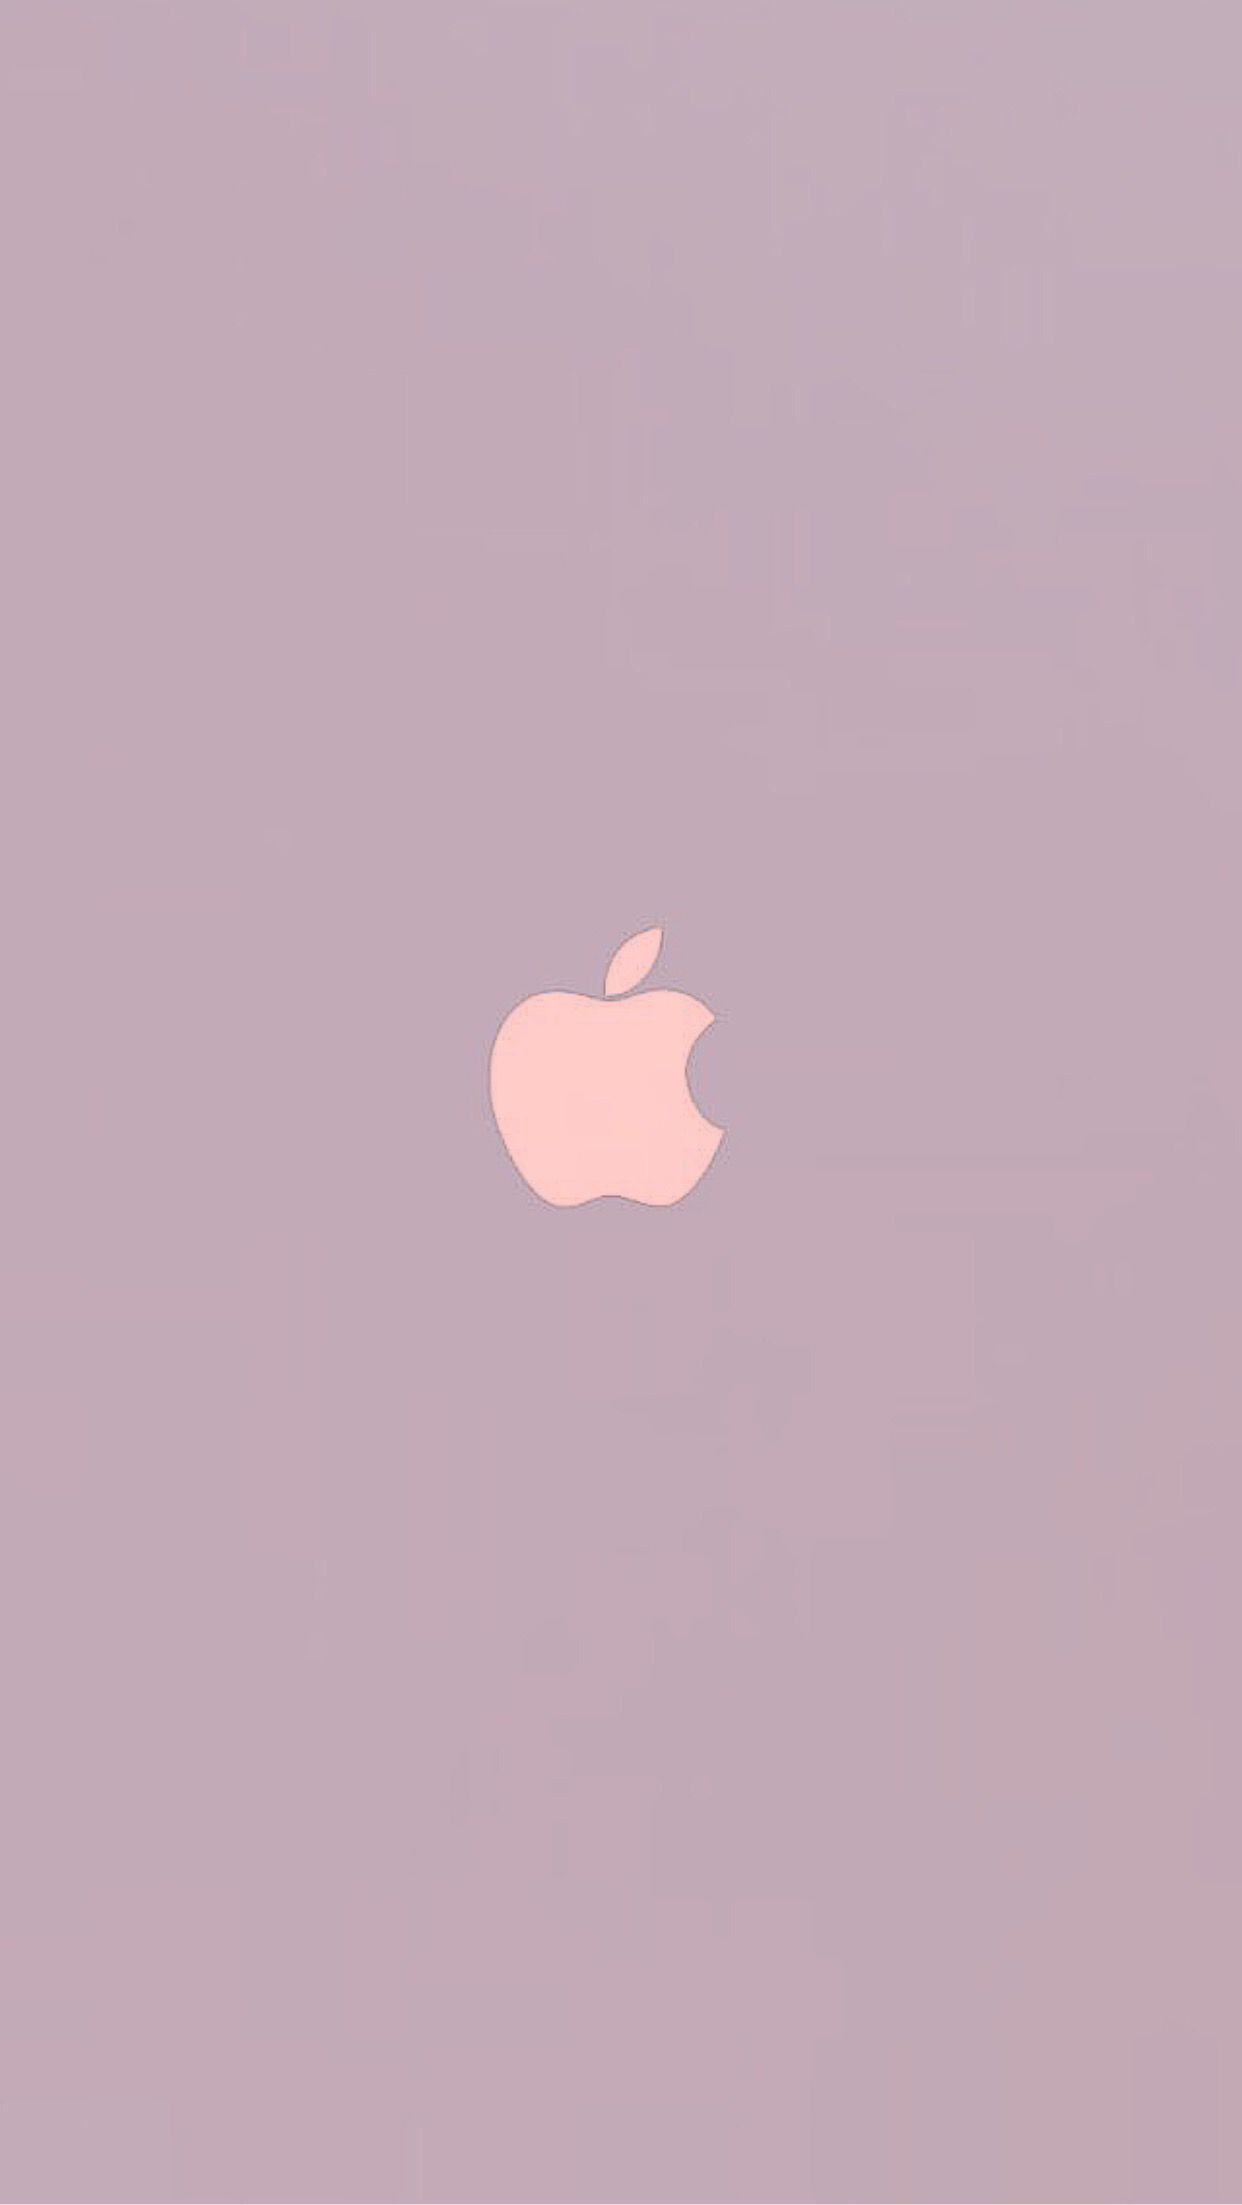 Wallpaper Depository: Iphone Wallpaper Apple Laptop